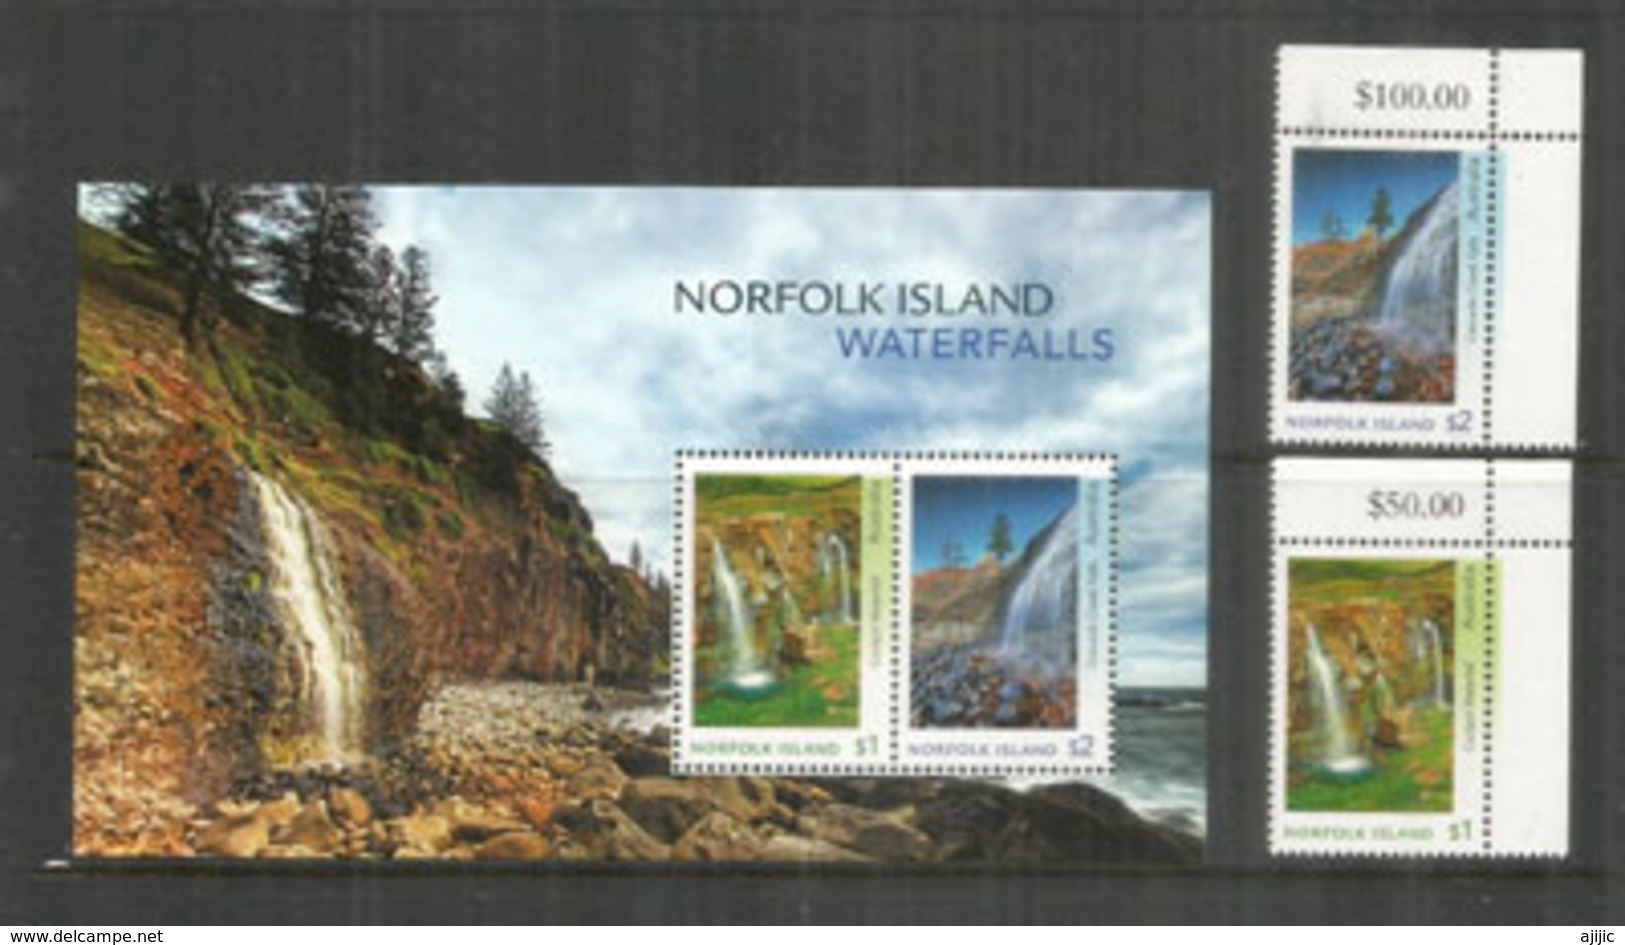 Norfolk Island Waterfalls. Cascades , Série + Bloc-feuillet Neufs ** Hautes Faciales $ 6,00, Année 2017 - Ile Norfolk